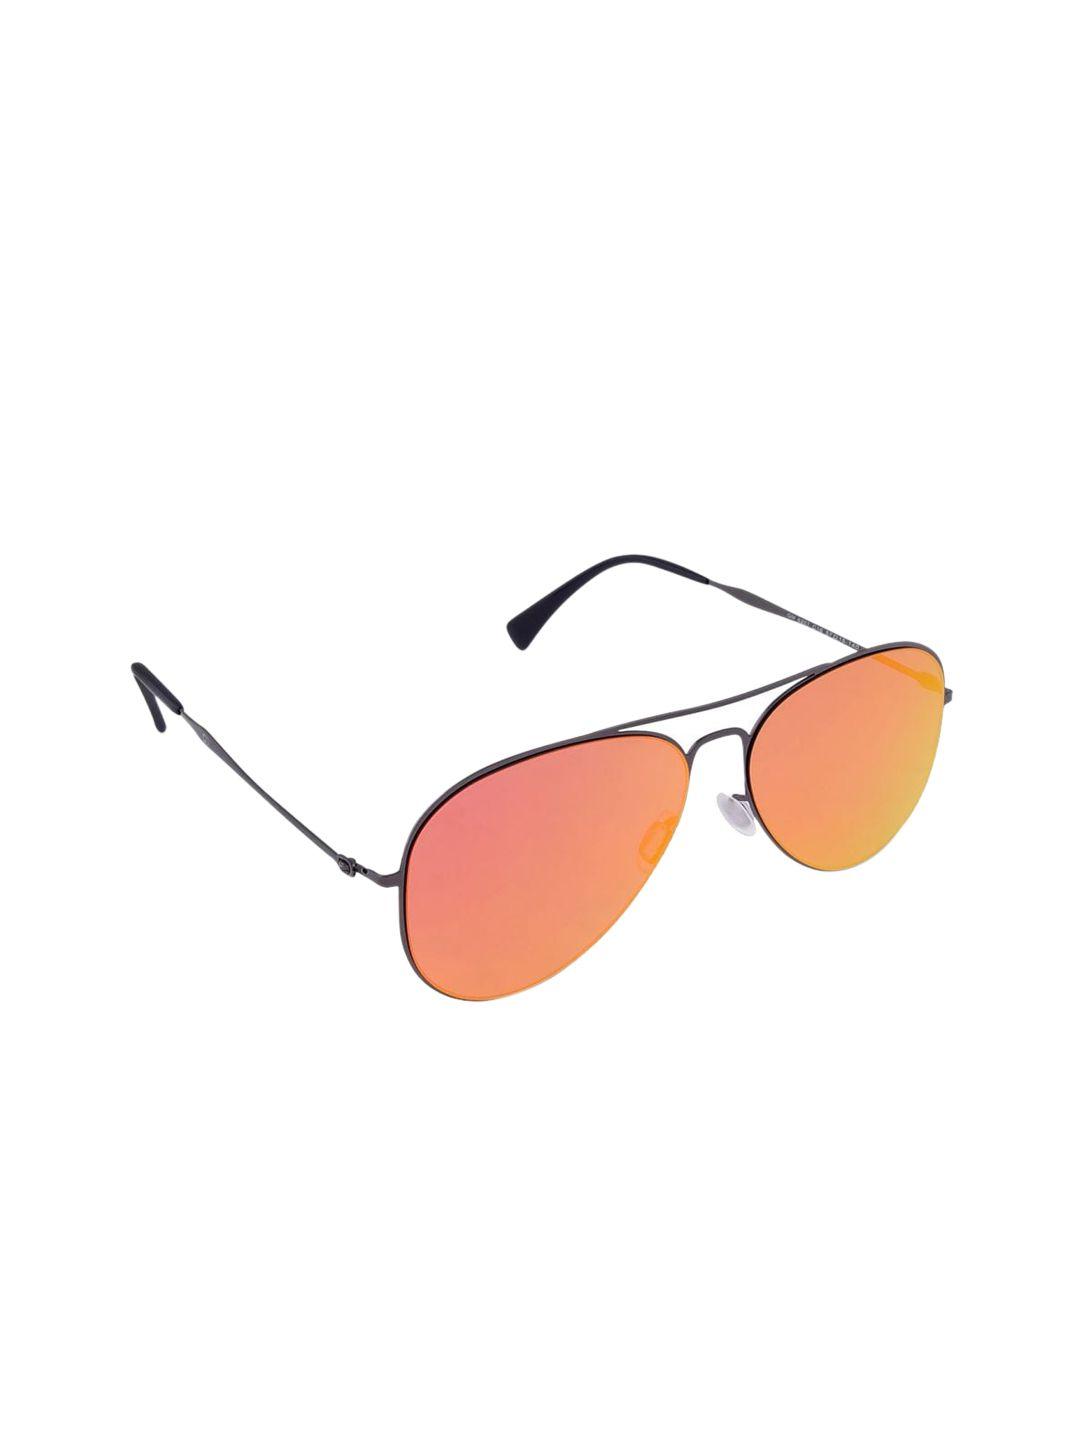 gio collection unisex aviator sunglasses gm6201c16